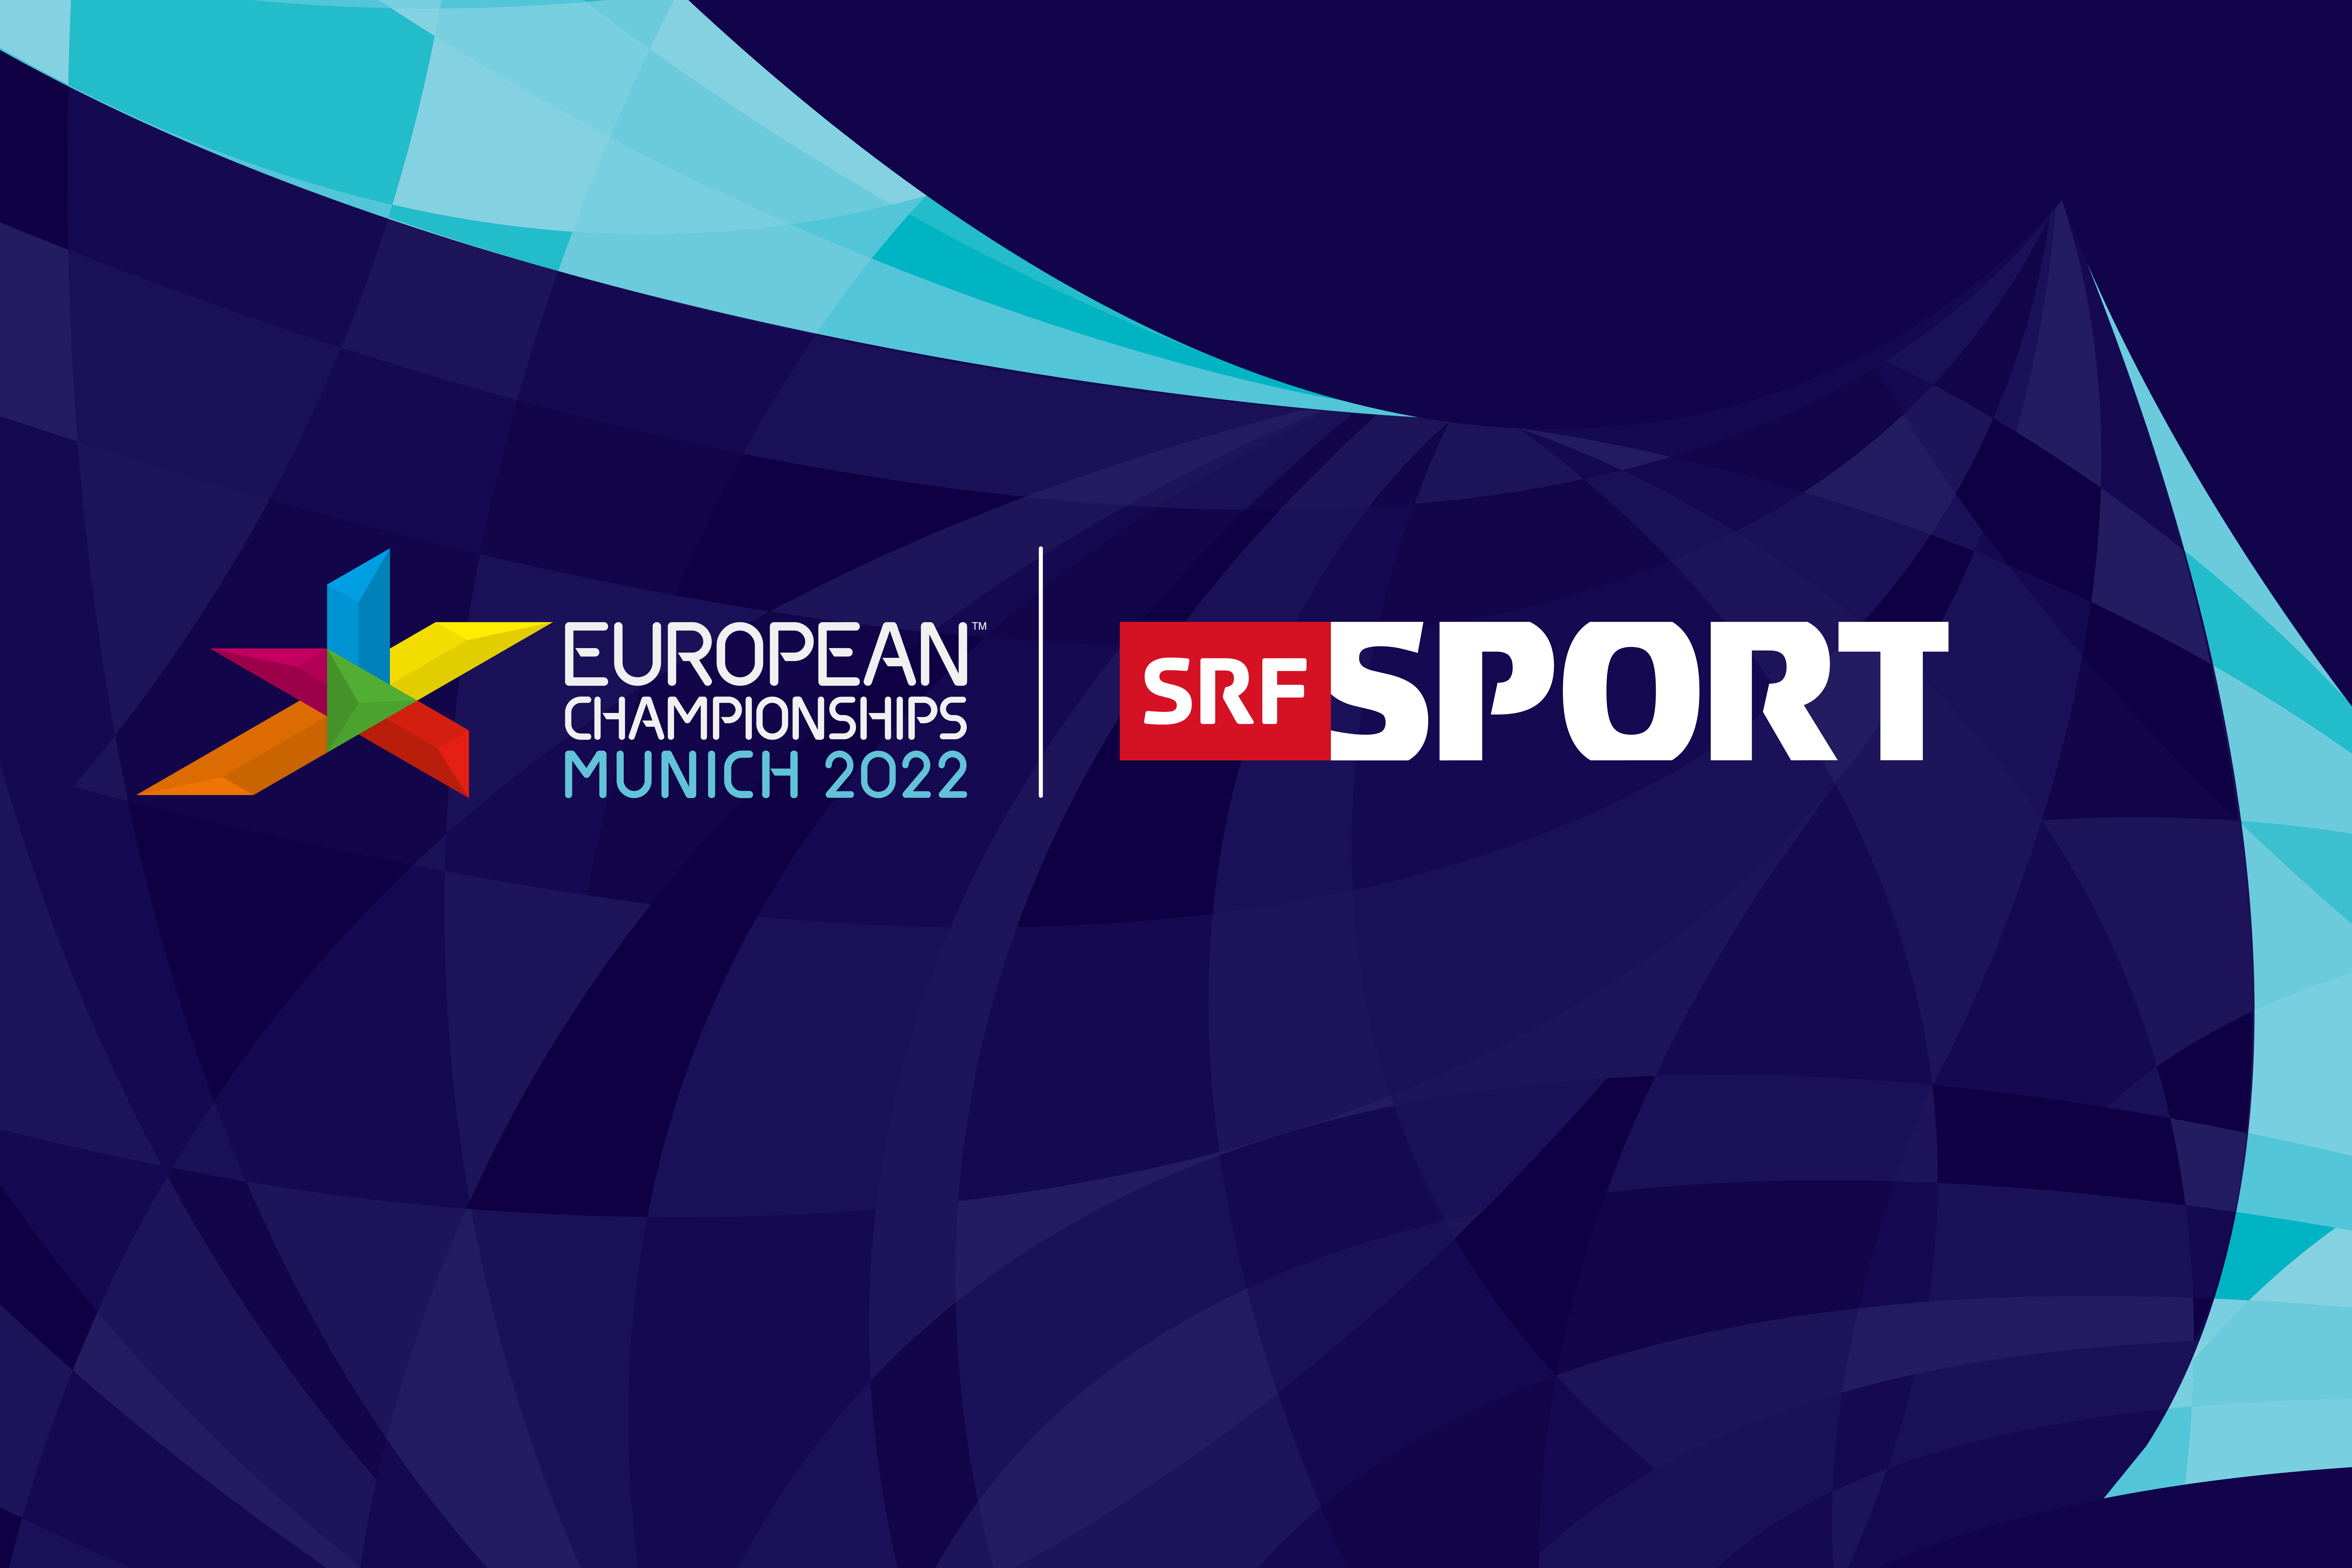 SRF rückt die European Championships in den Fokus - Medienportal